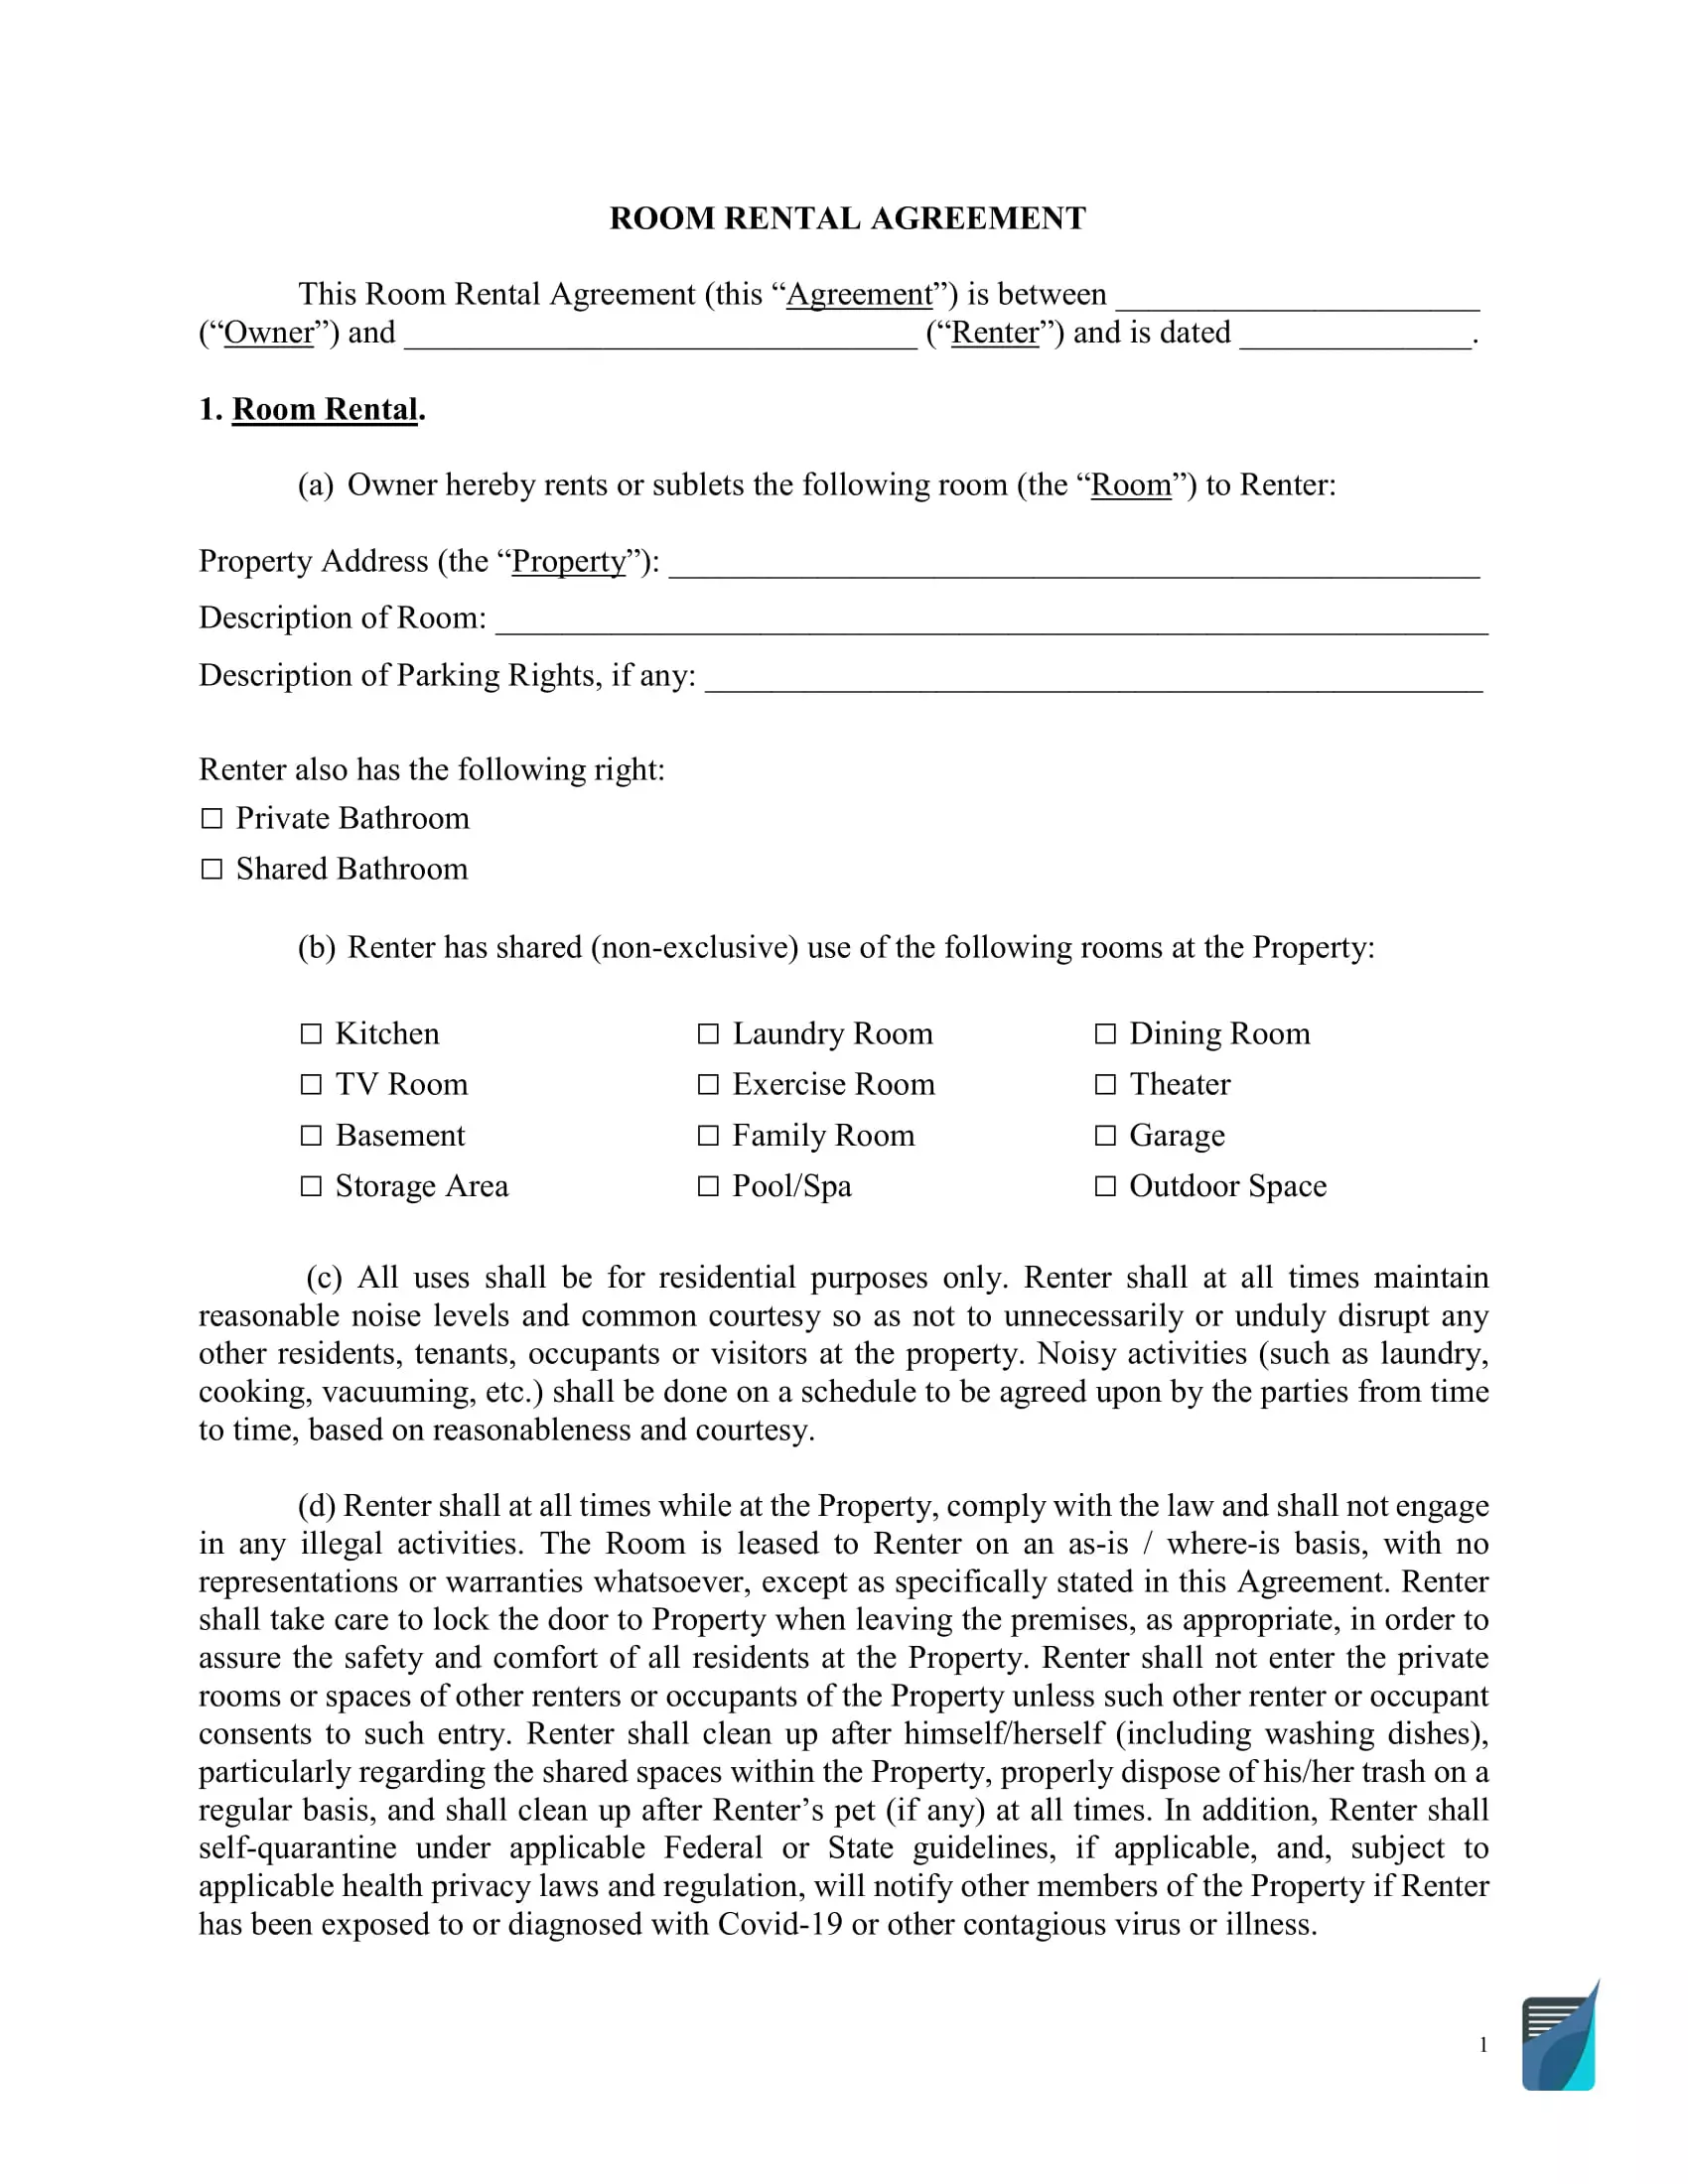 Room Rental Agreement Form